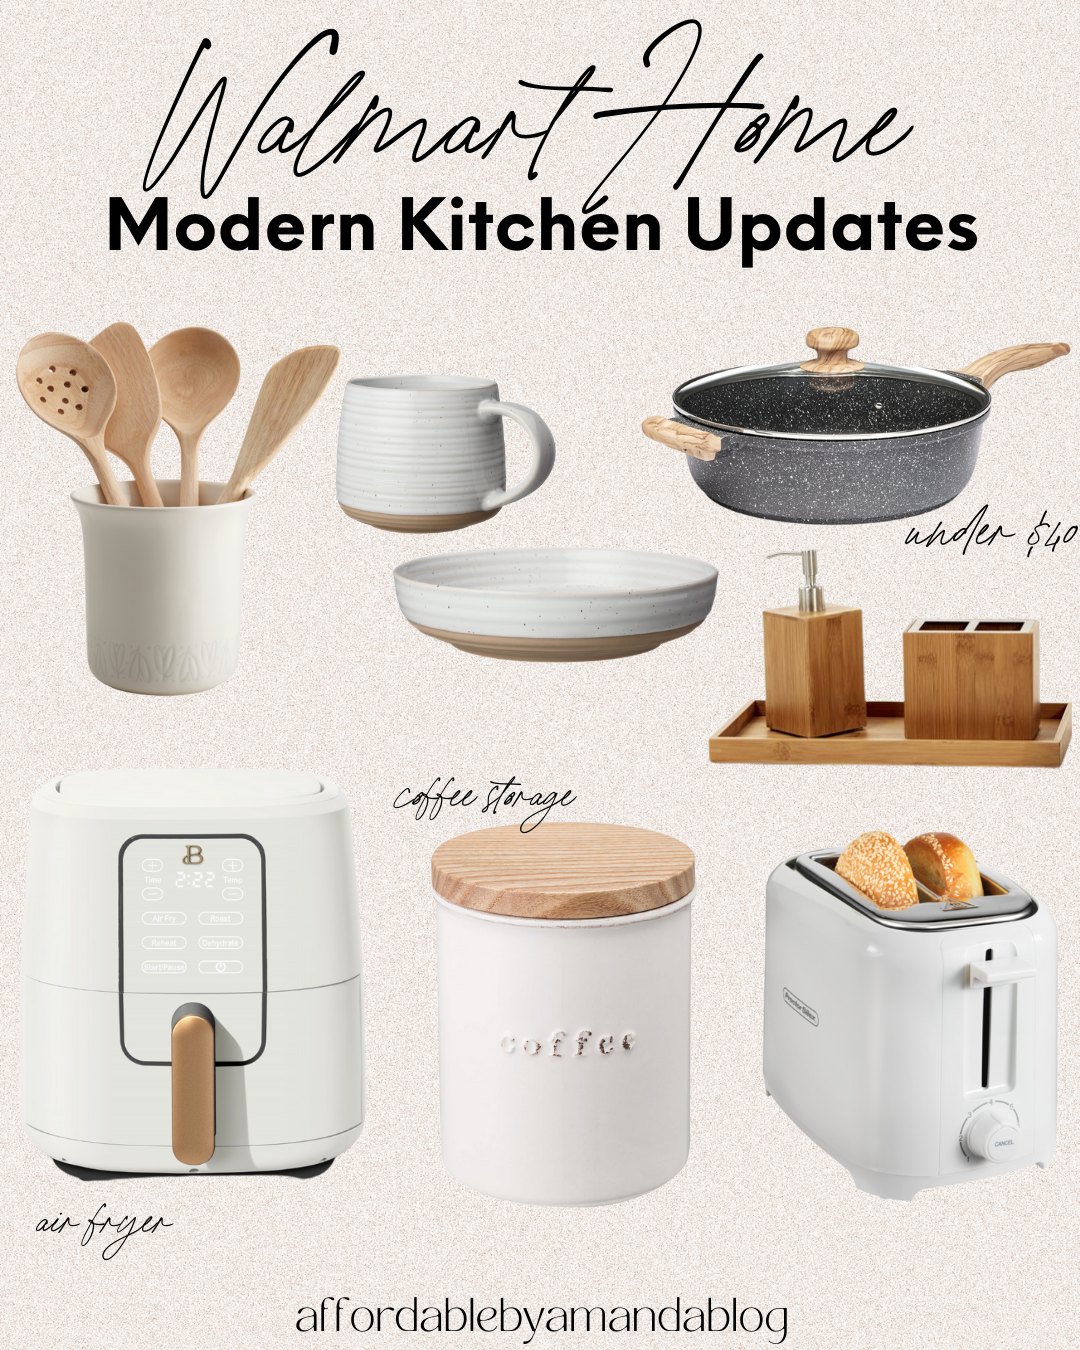 Walmart Home Modern Kitchen Updates - www.affordablebyamanda.com - Affordable by Amanda